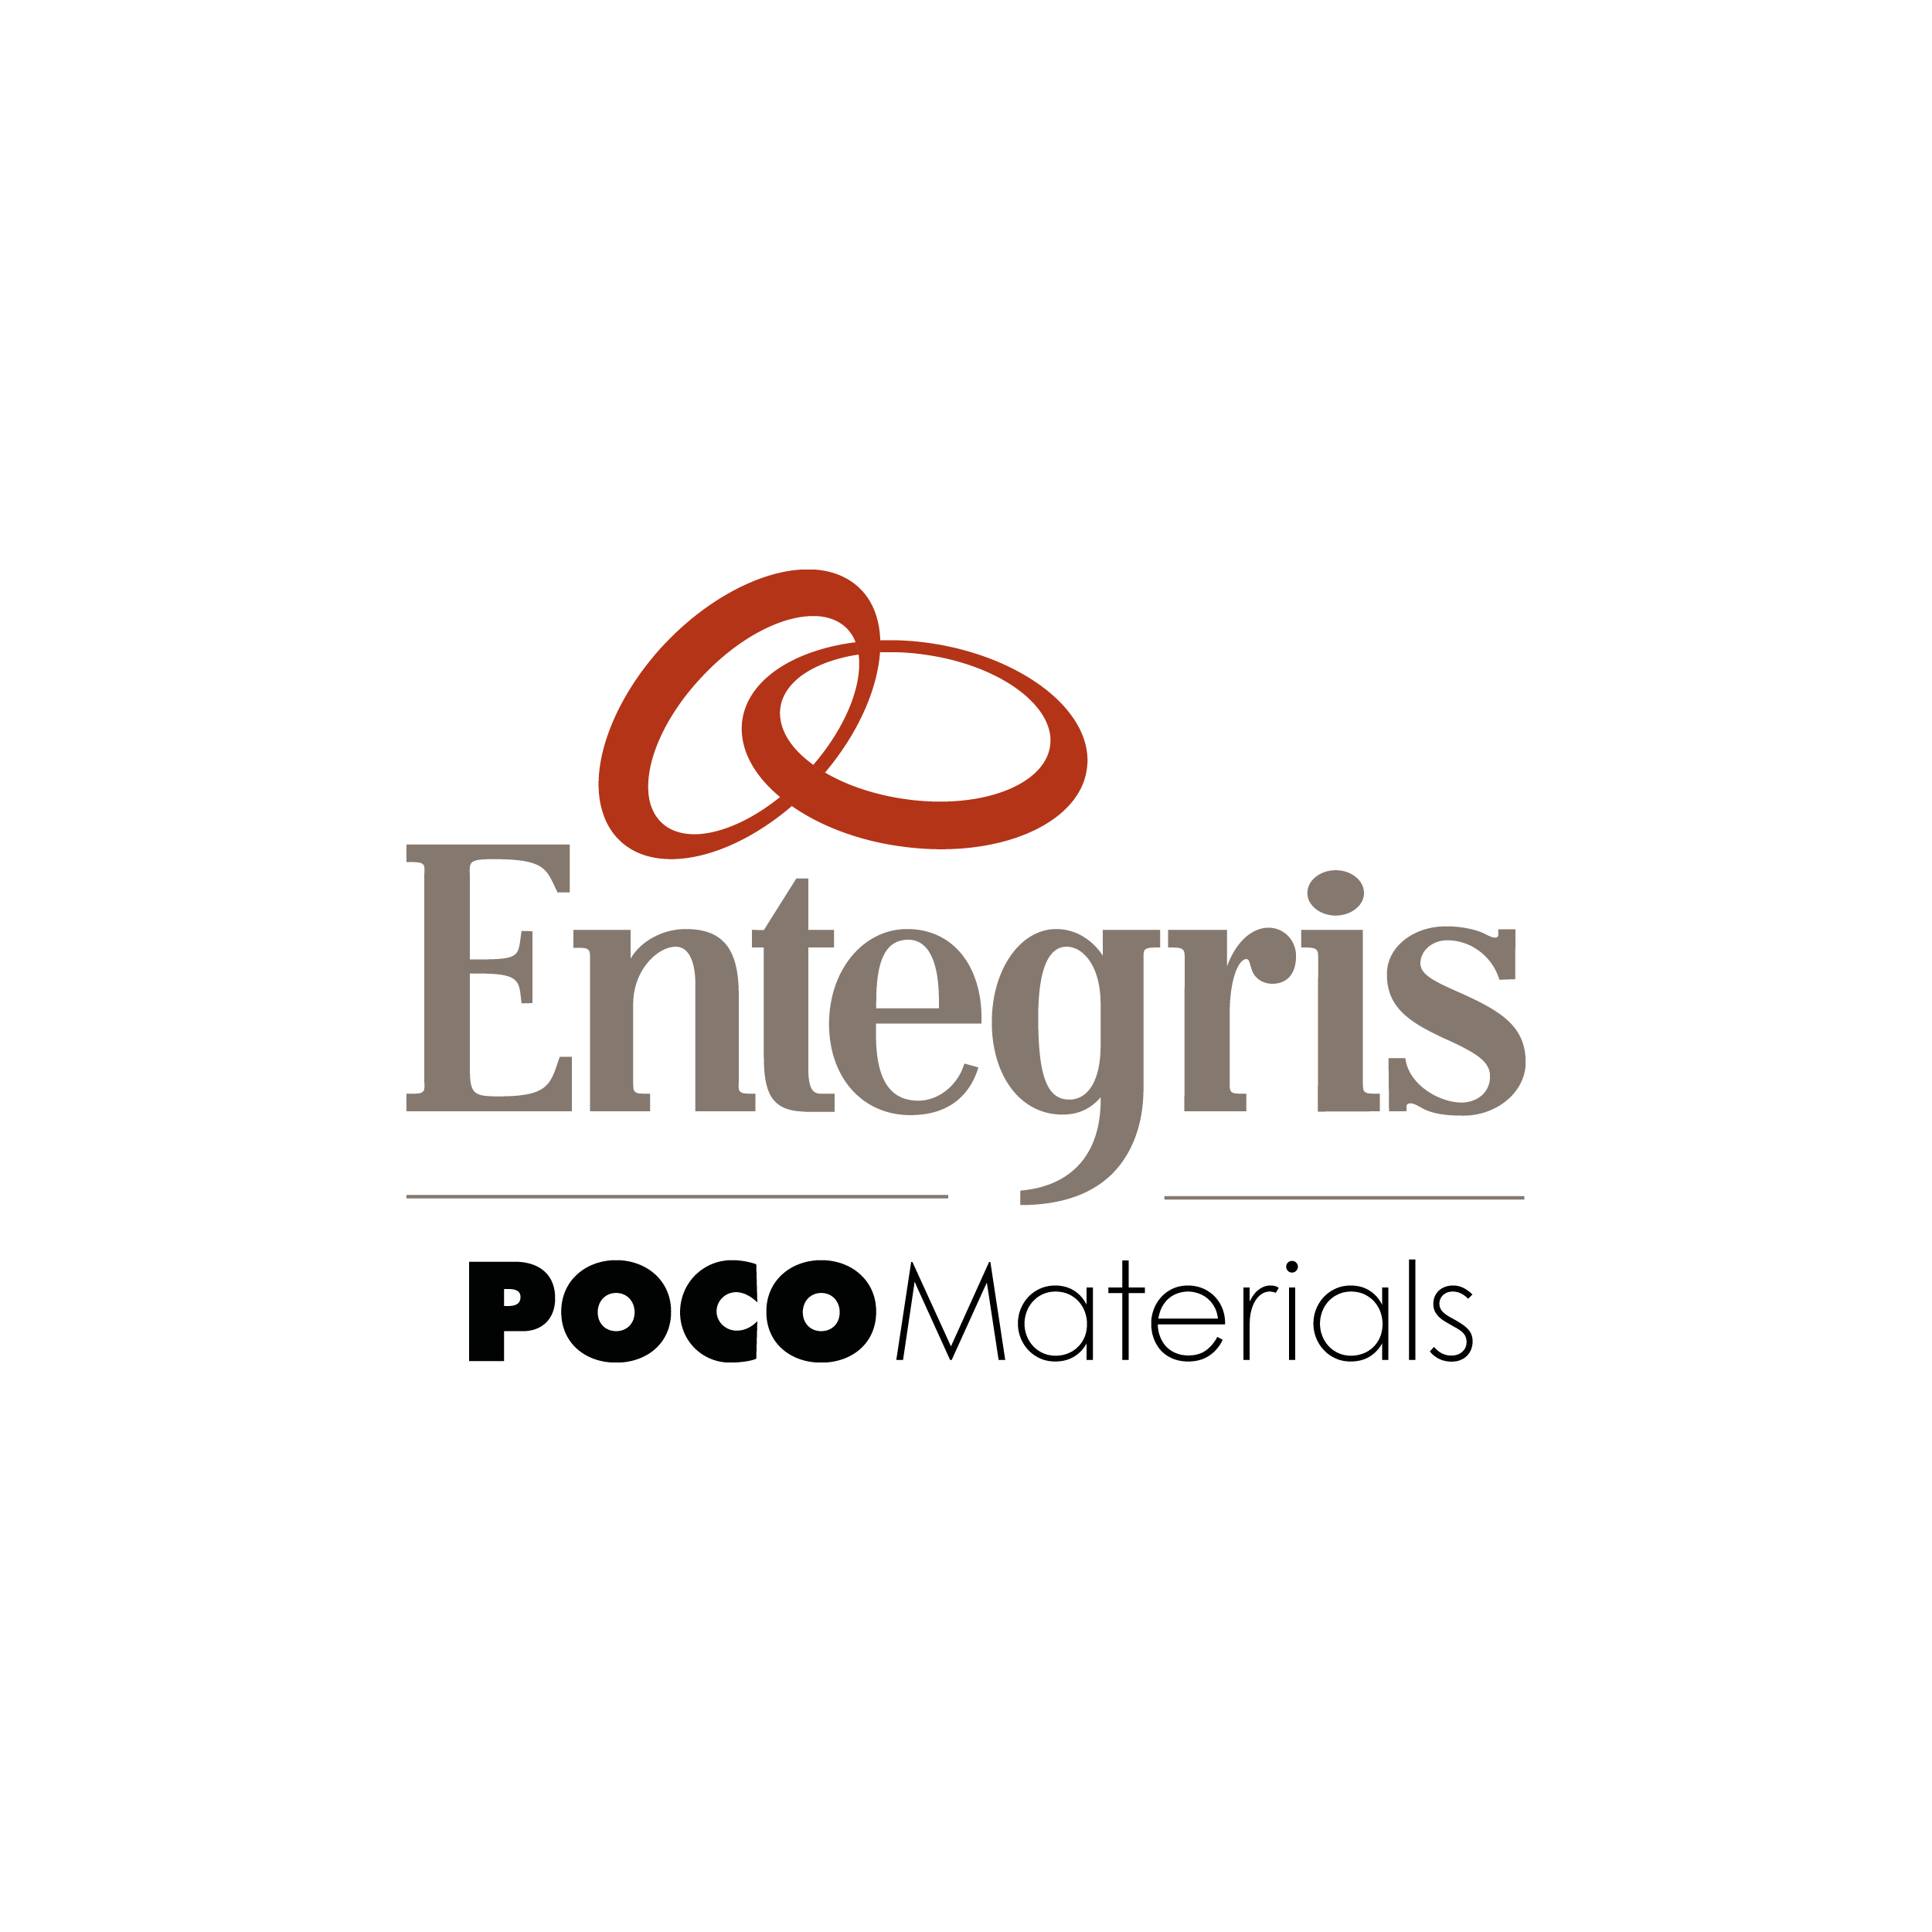 Entegris POCO Materials